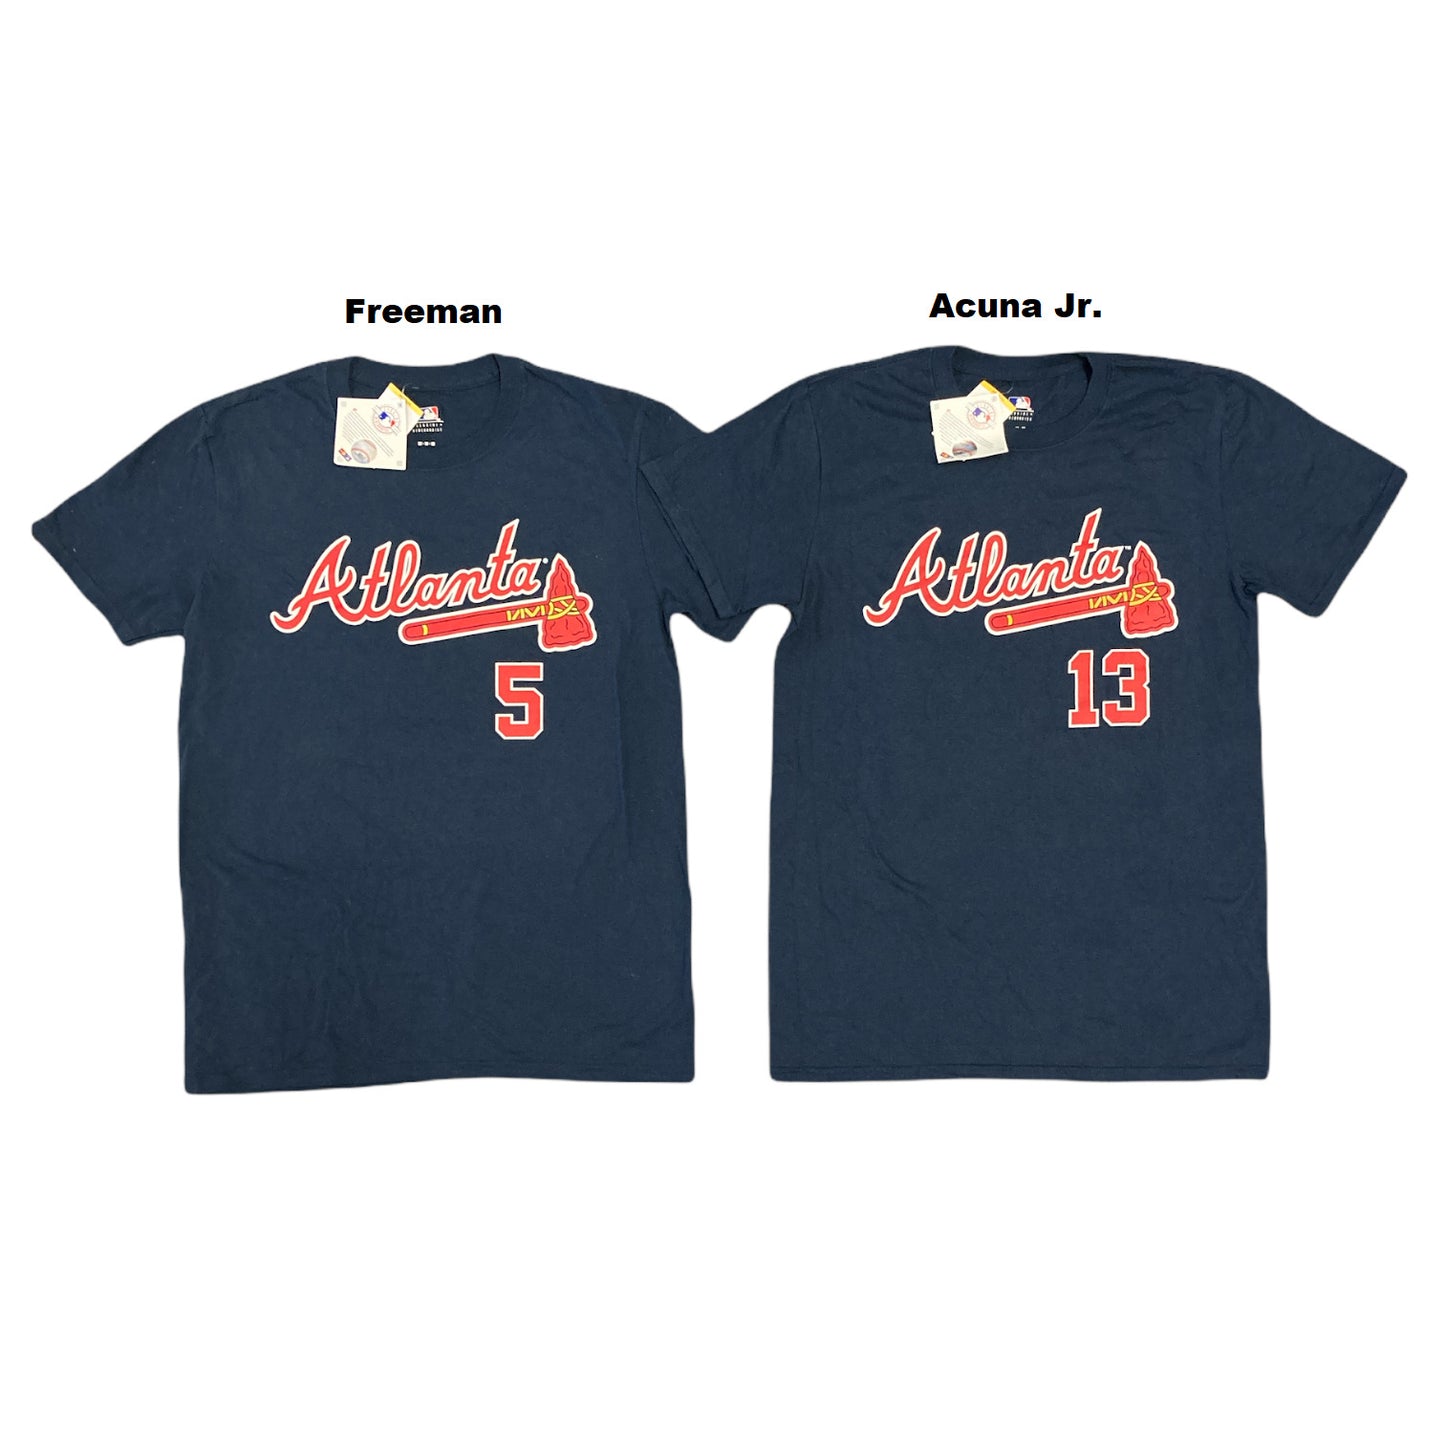 MLB Genuine Merchandise Atlanta Braves Acuna Jr 13 Freeman 5 Short Sleeve TShirt